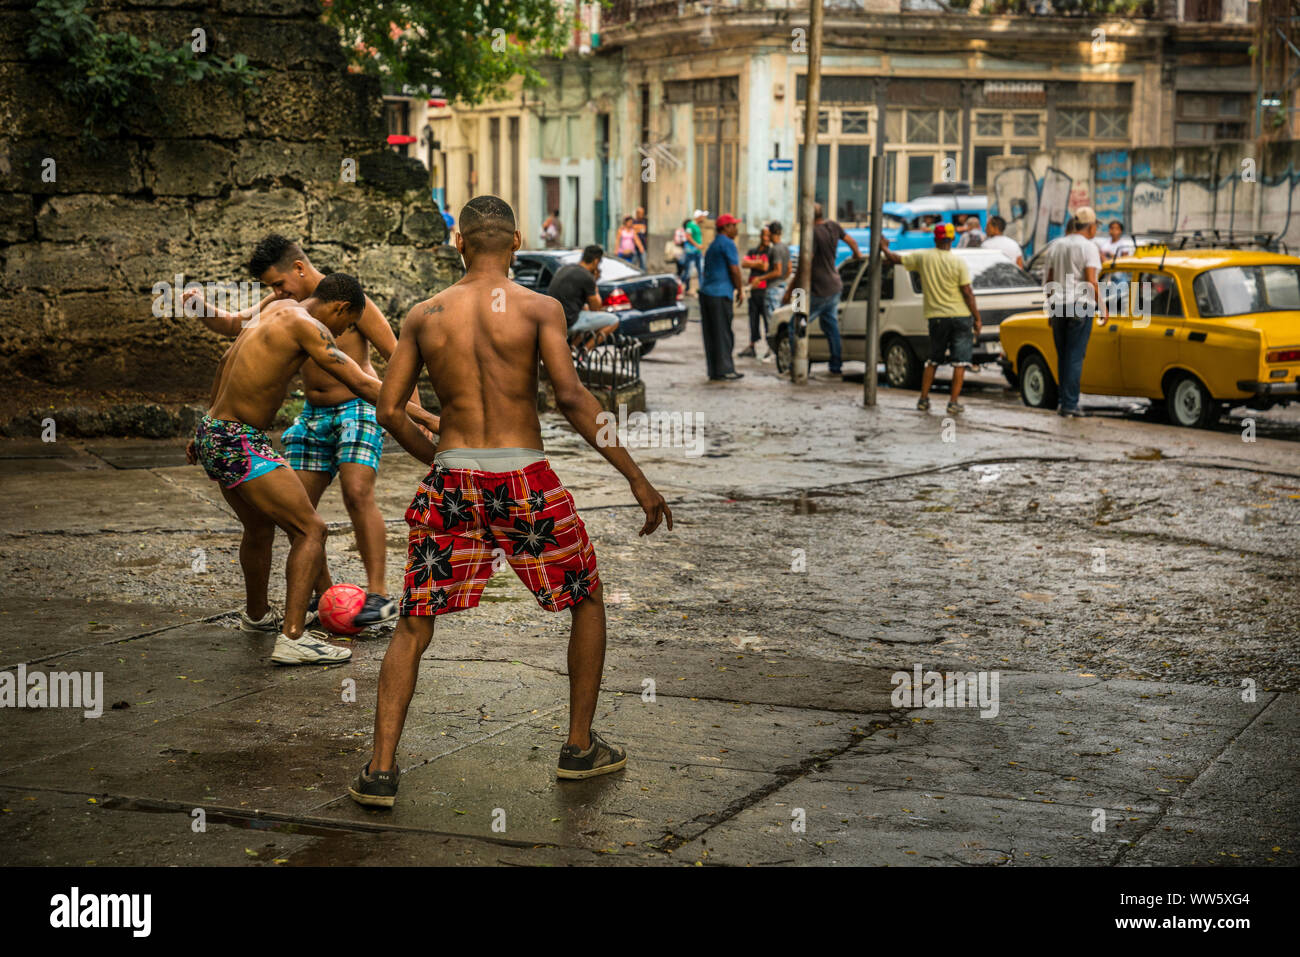 Young men playing football on the street, Havana, Cuba Stock Photo